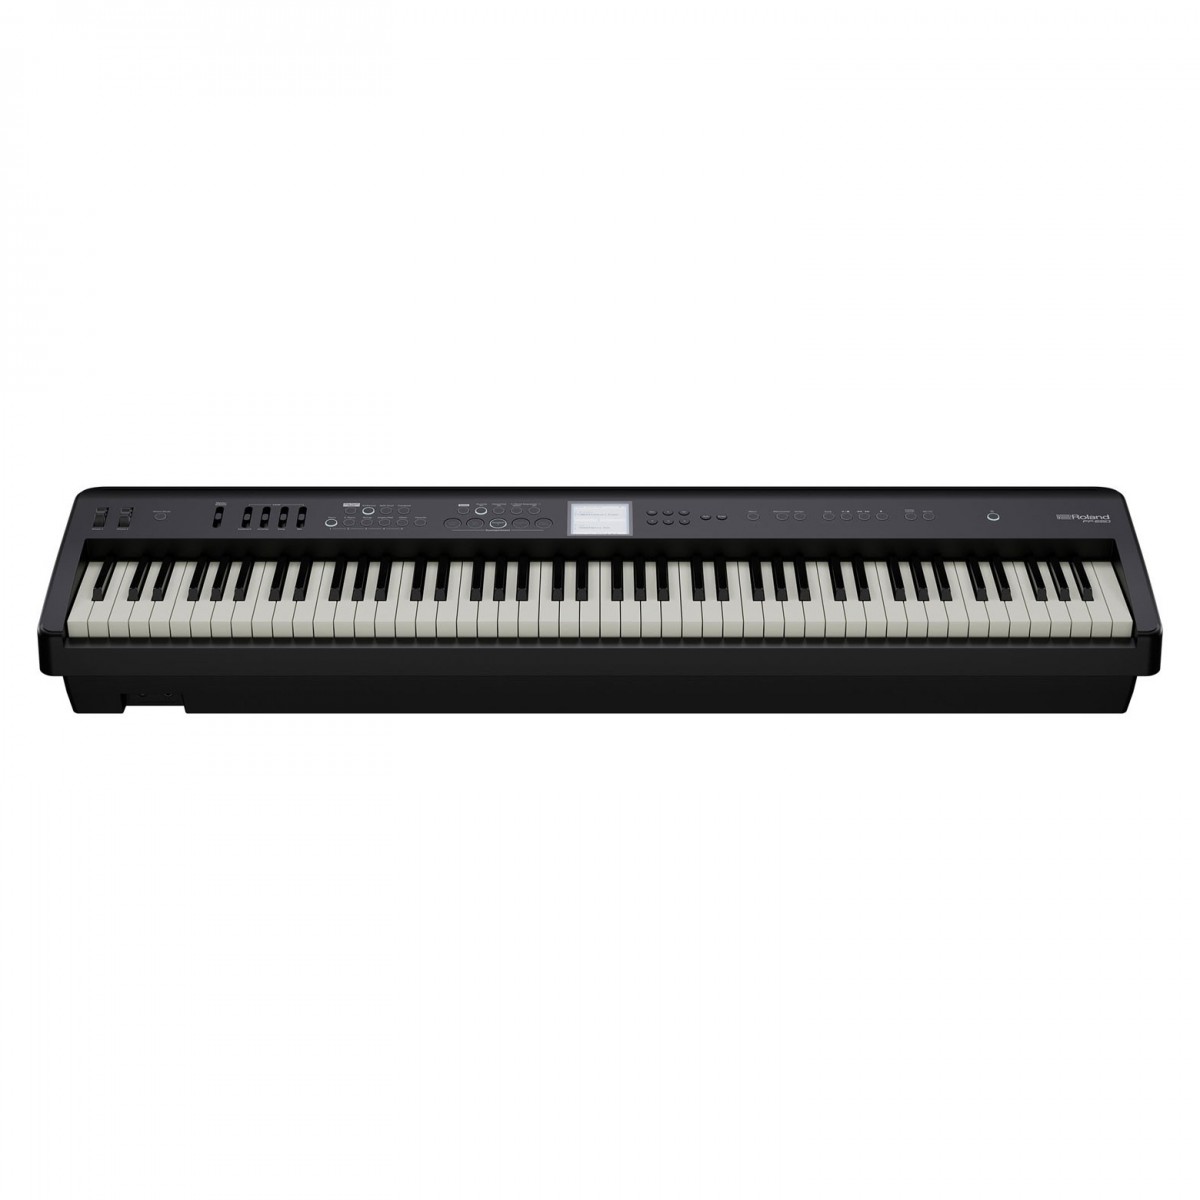 ROLAND FP-E50 PIANOFORTE DIGITALE 88 TASTI PESATI 2